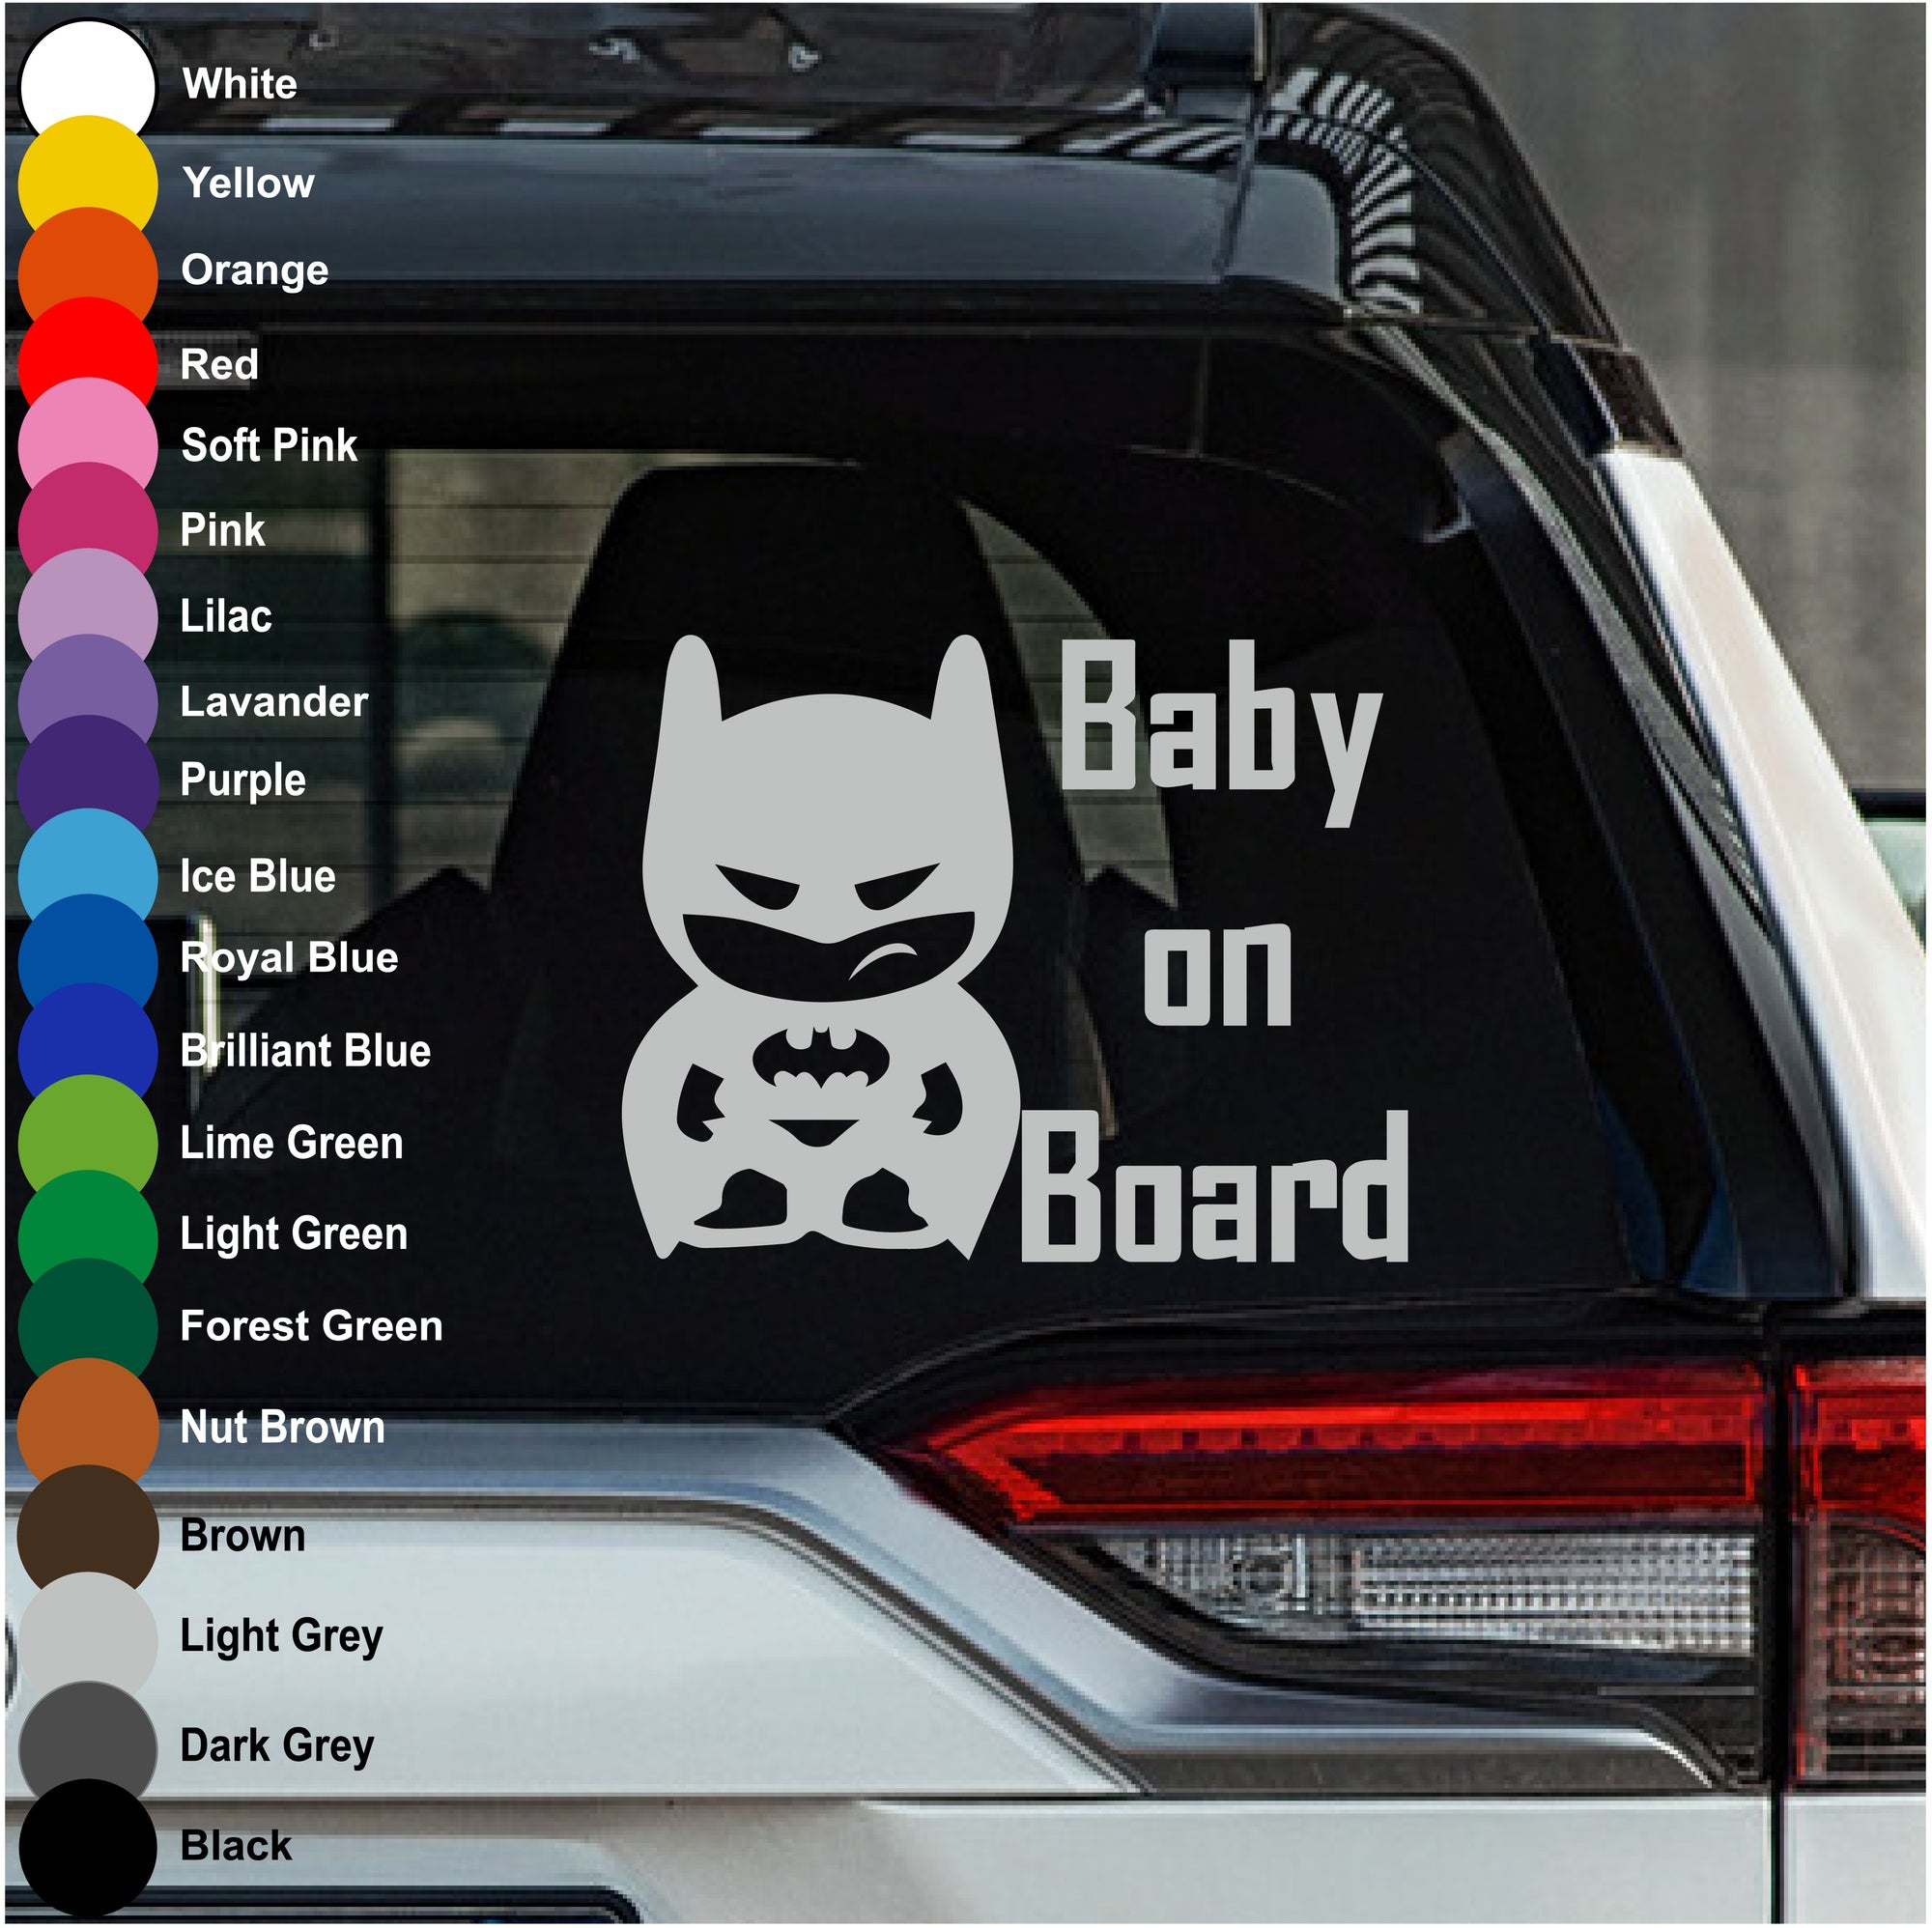 BAT BABY ON BOARD CAR DECAL - Crazy4Decals